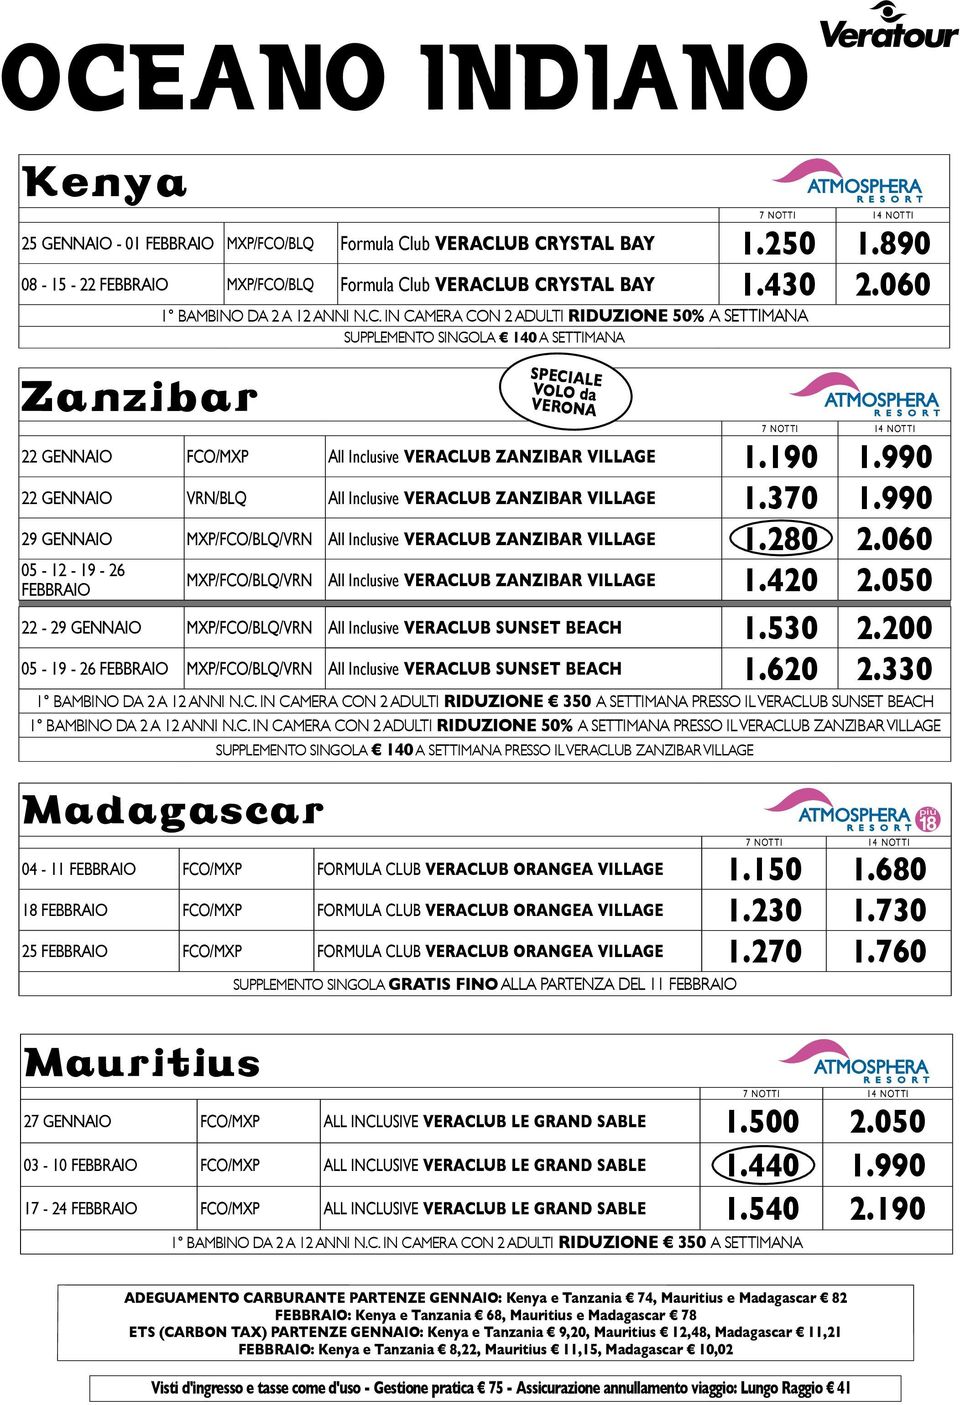 990 29 gennaio mxp/fco/blq/vrn All inclusive Veraclub zanzibar village 1.280 2.060 05-12 - 19-26 febbraio mxp/fco/blq/vrn All inclusive Veraclub zanzibar village 1.420 2.